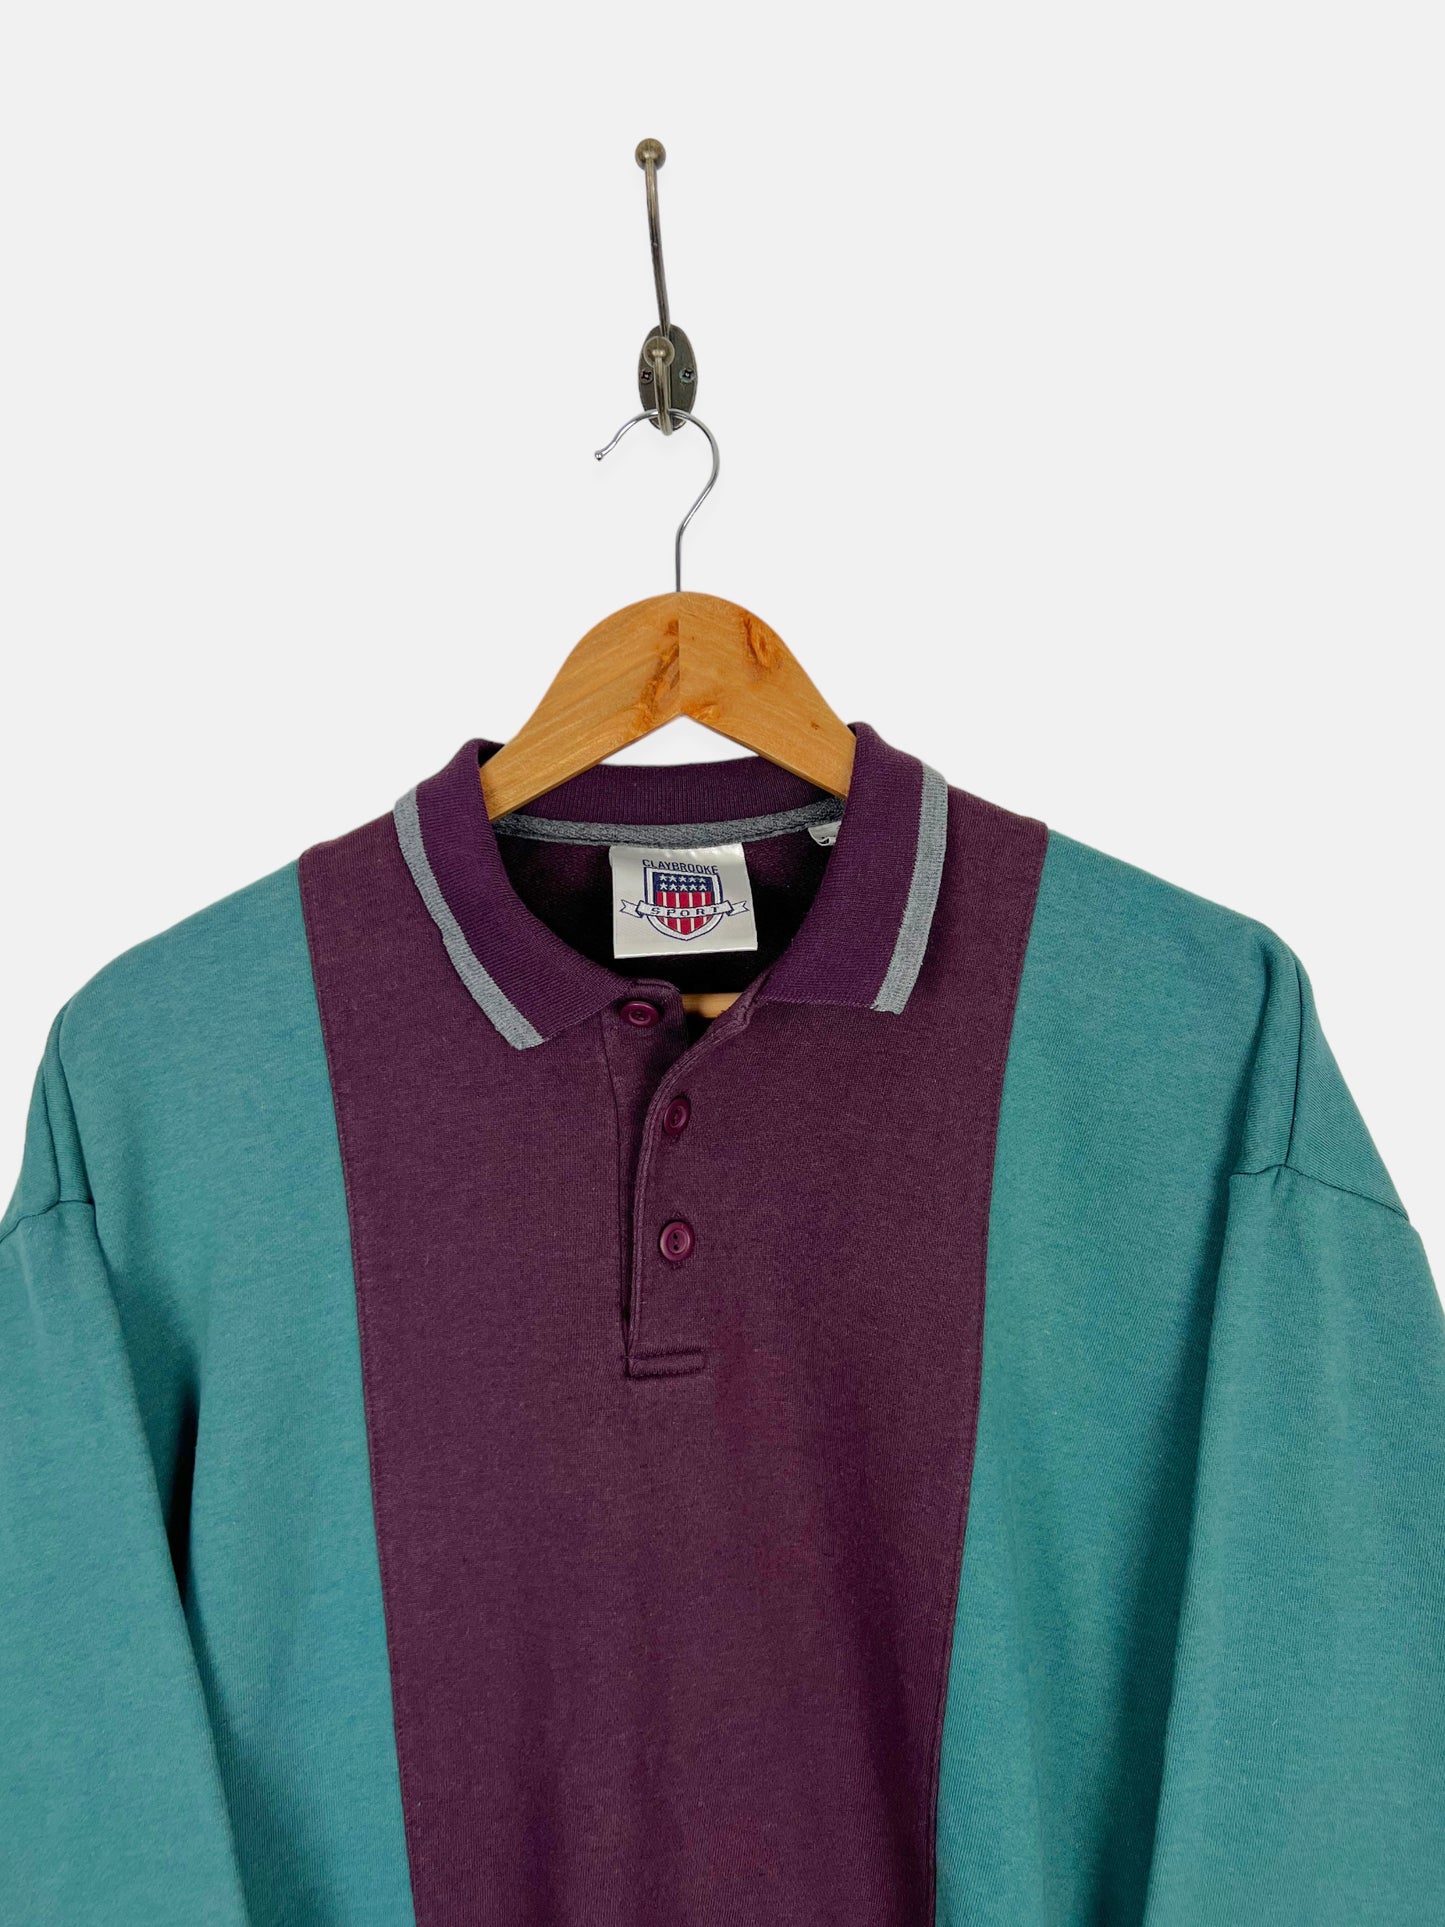 90's Colour-Block Vintage Collared Sweatshirt Size 10-12